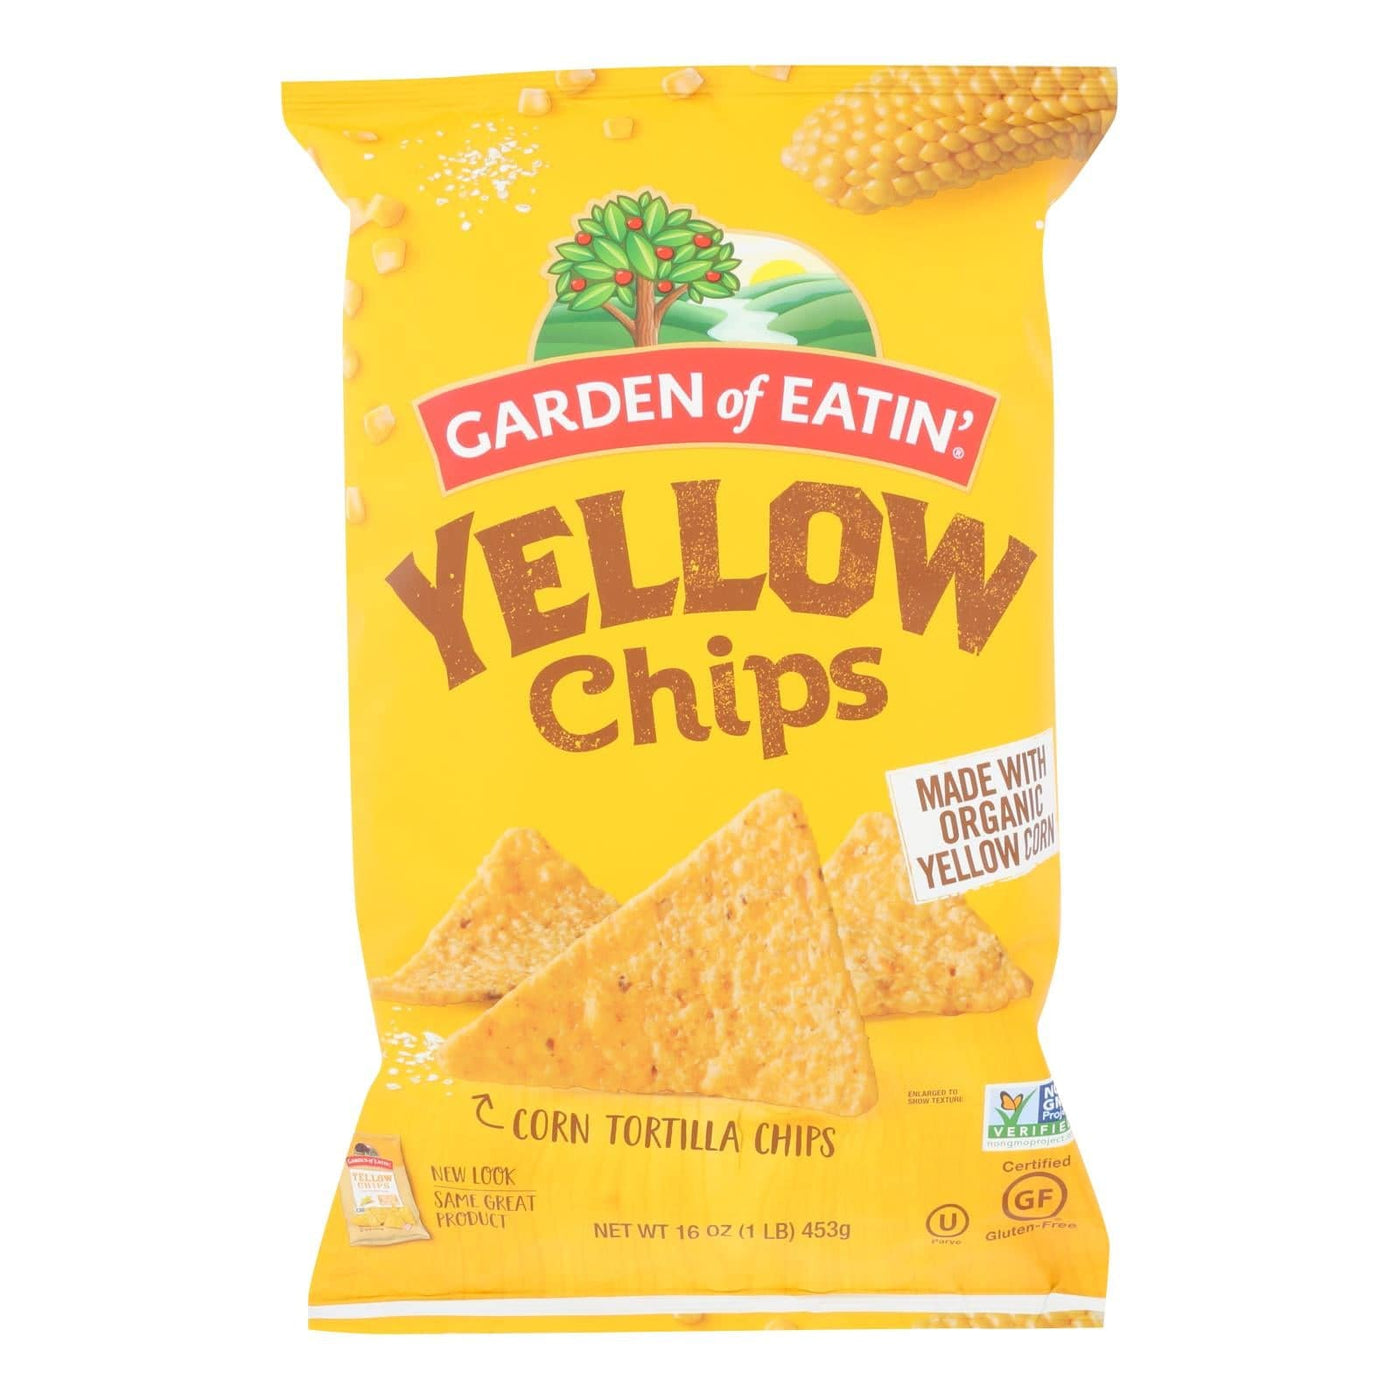 Buy Garden Of Eatin' Yellow Corn Tortilla Chips - Tortilla Chips - Case Of 12 - 16 Oz.  at OnlyNaturals.us